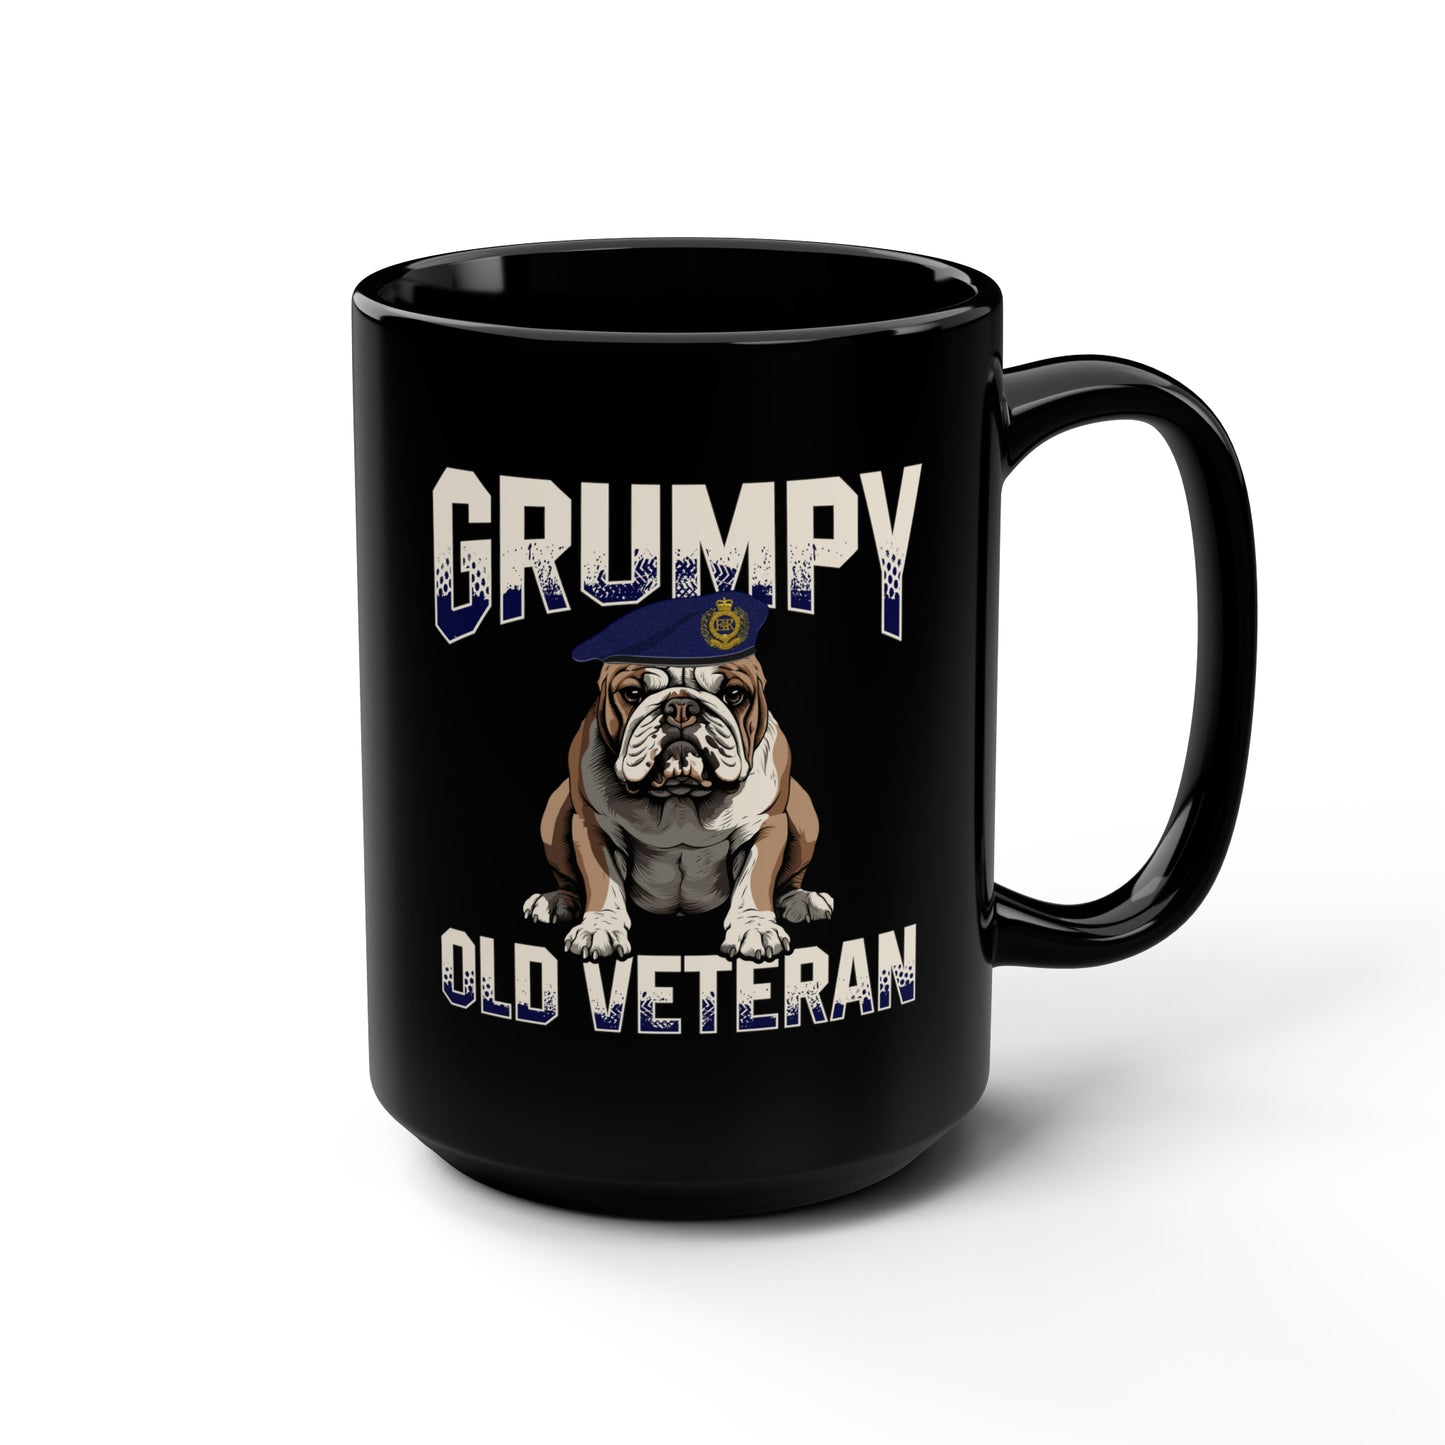 Grumpy Old Royal Engineers Veteran Jumbo Mug